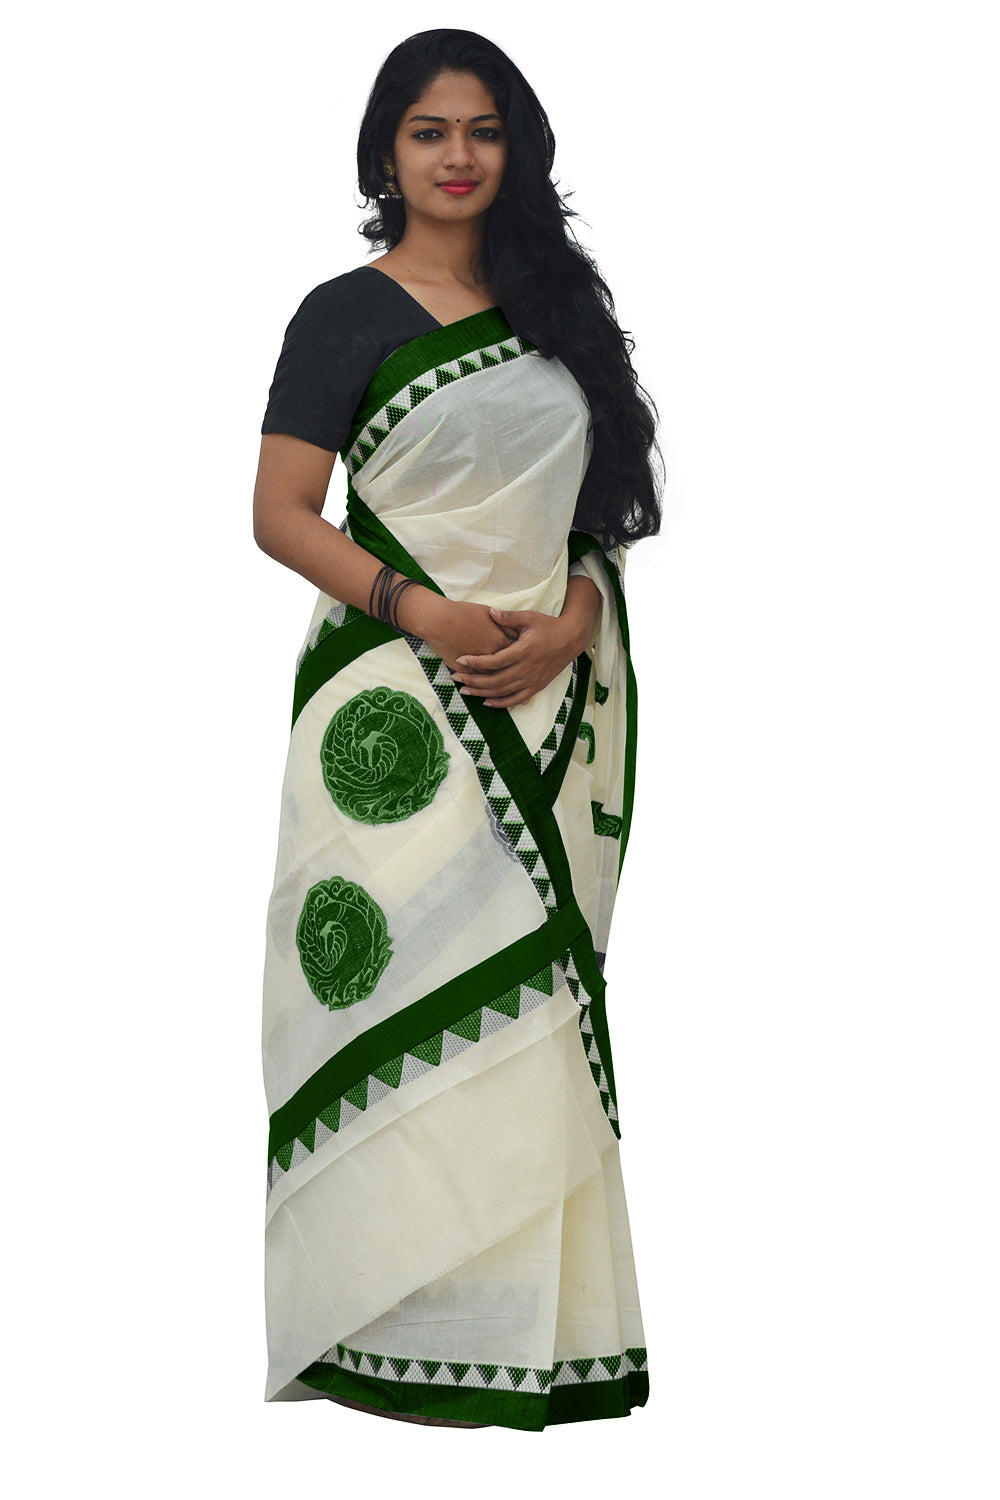 Kerala Saree with Dark Green Peacock Art Embroidery Design